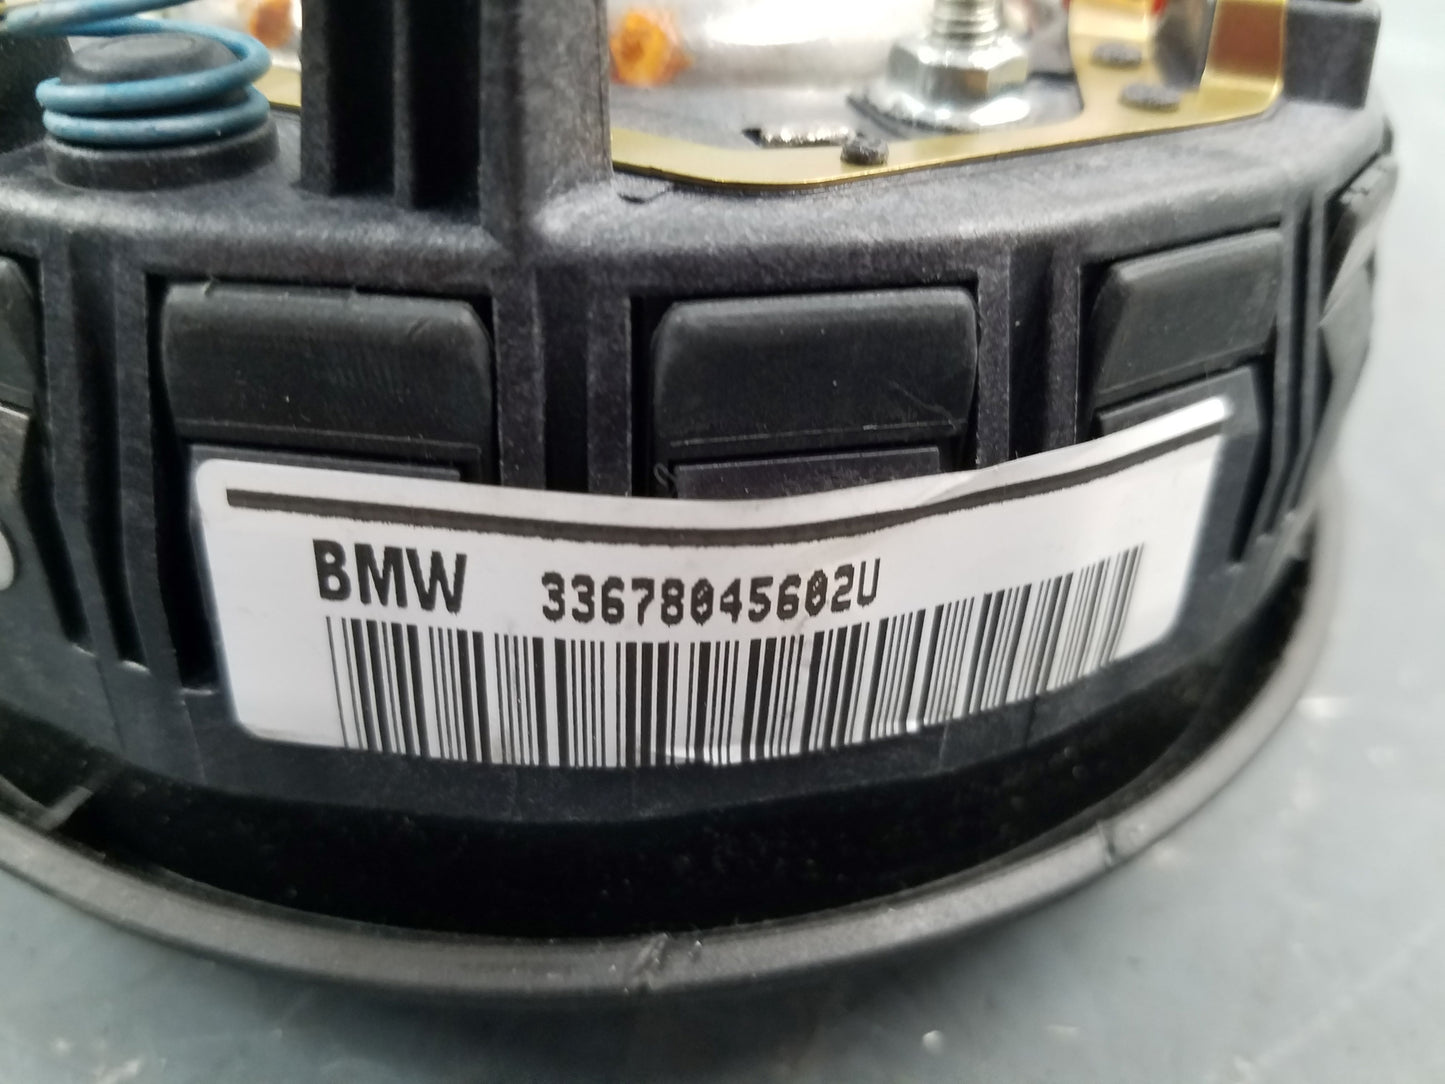 2008 BMW M6 E63 Steering Wheel Airbag #4556 D1